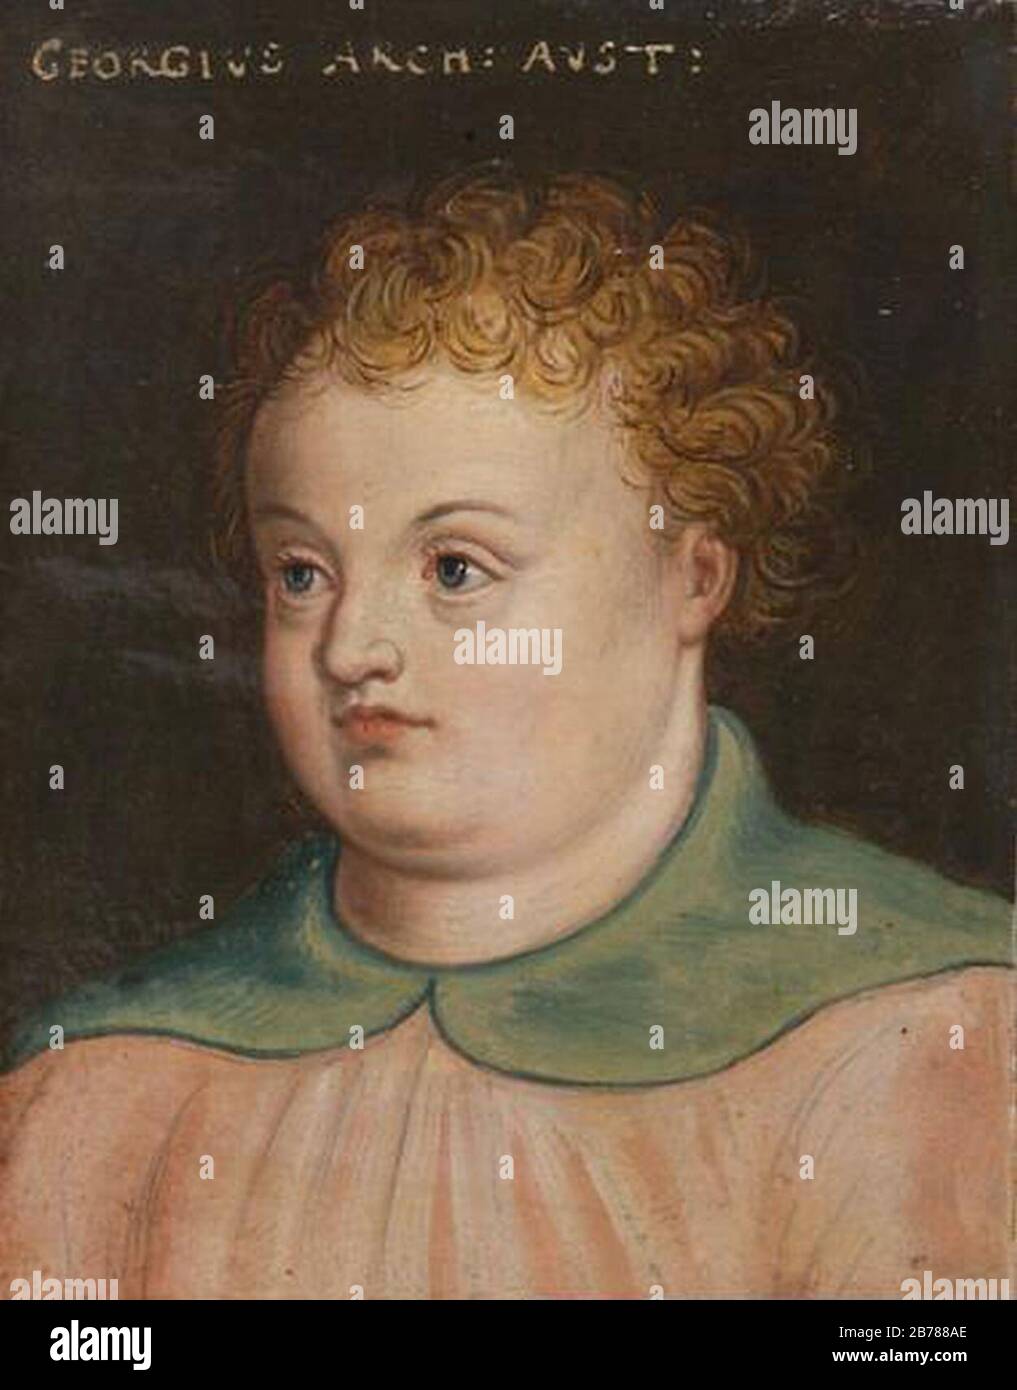 George starb jung 1435. Stockfoto